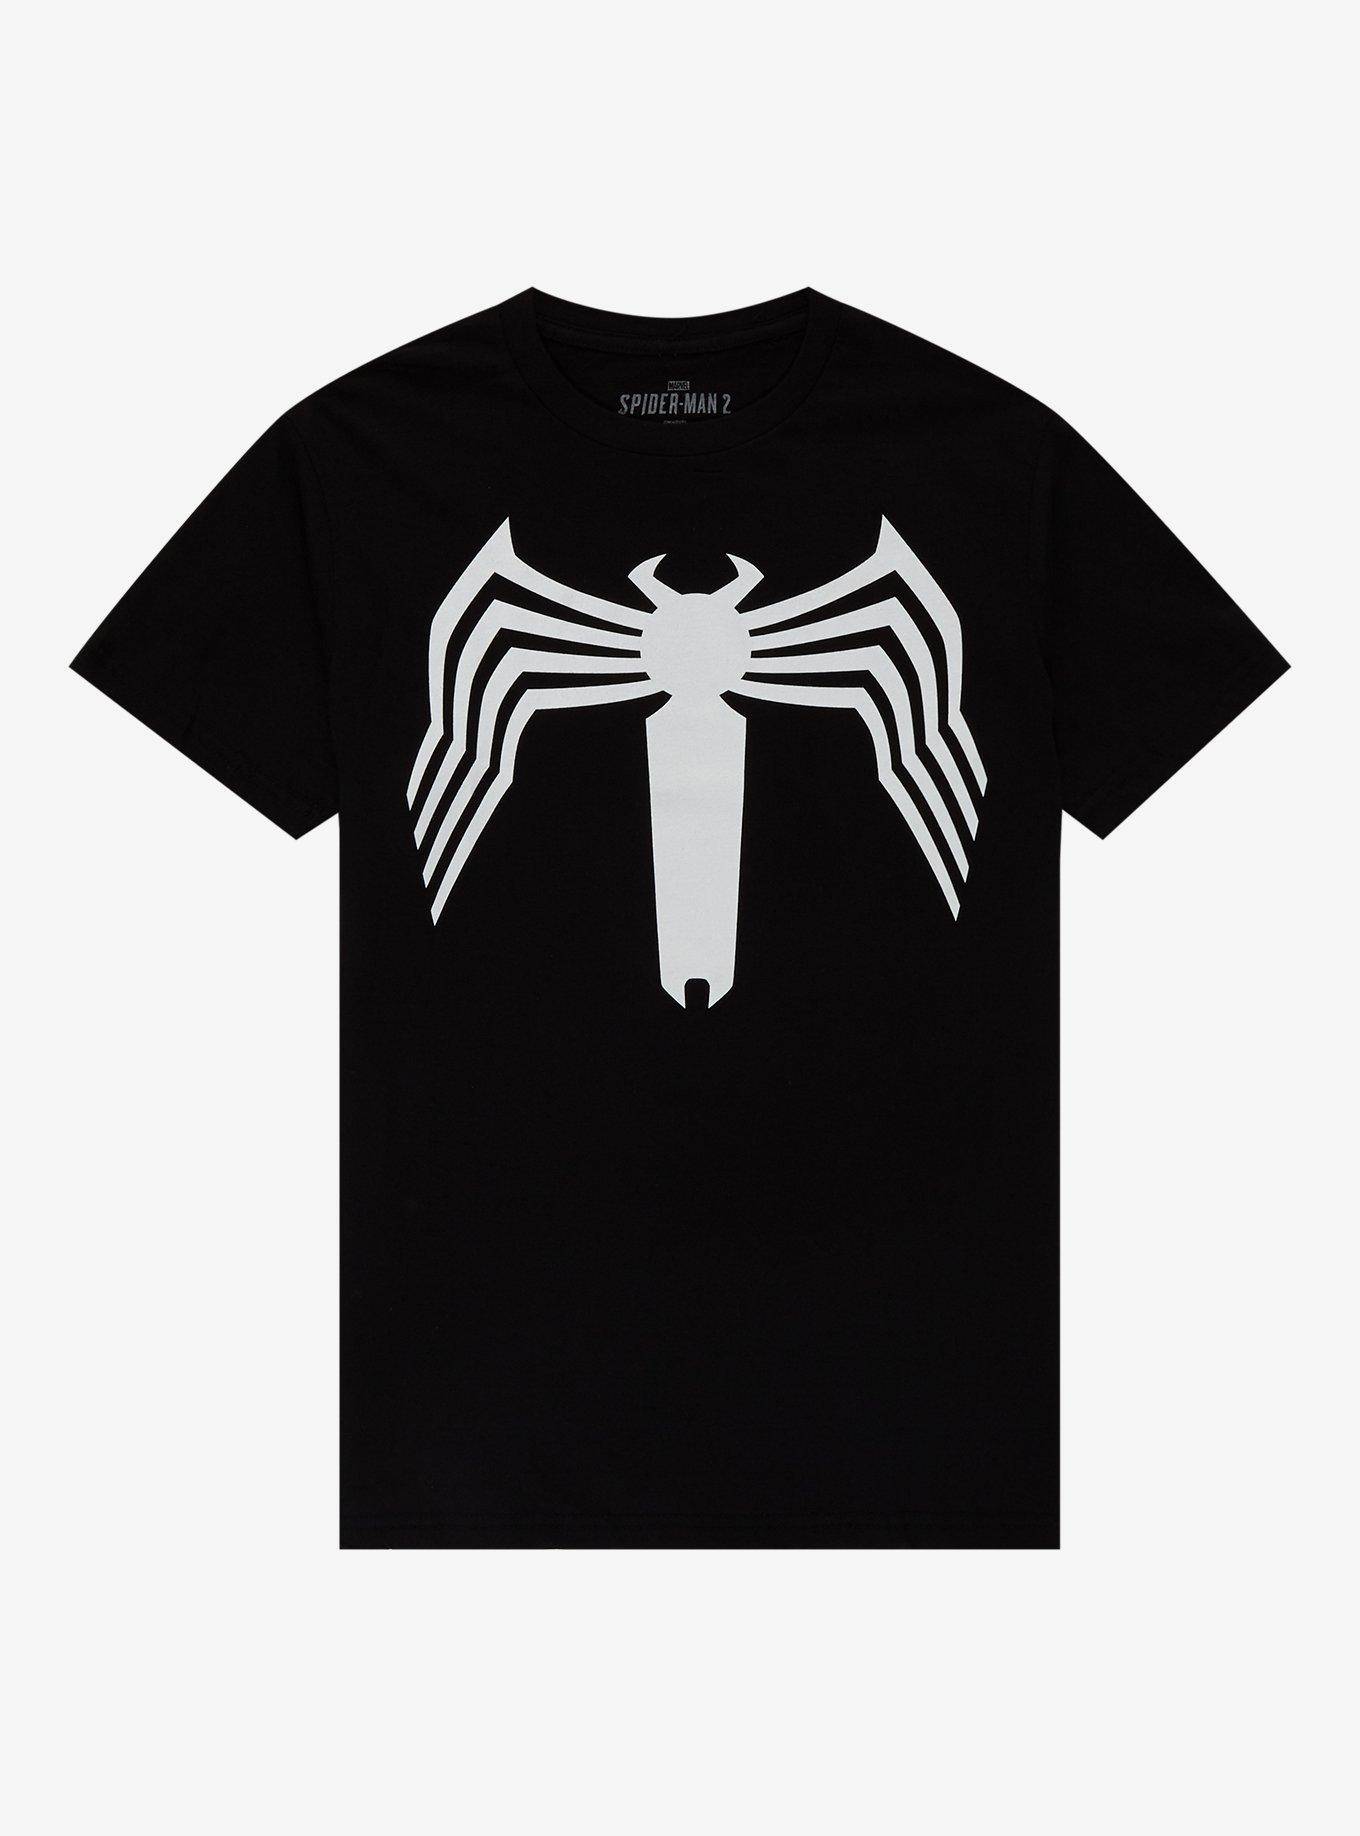 Marvel's spider-man 2 logo